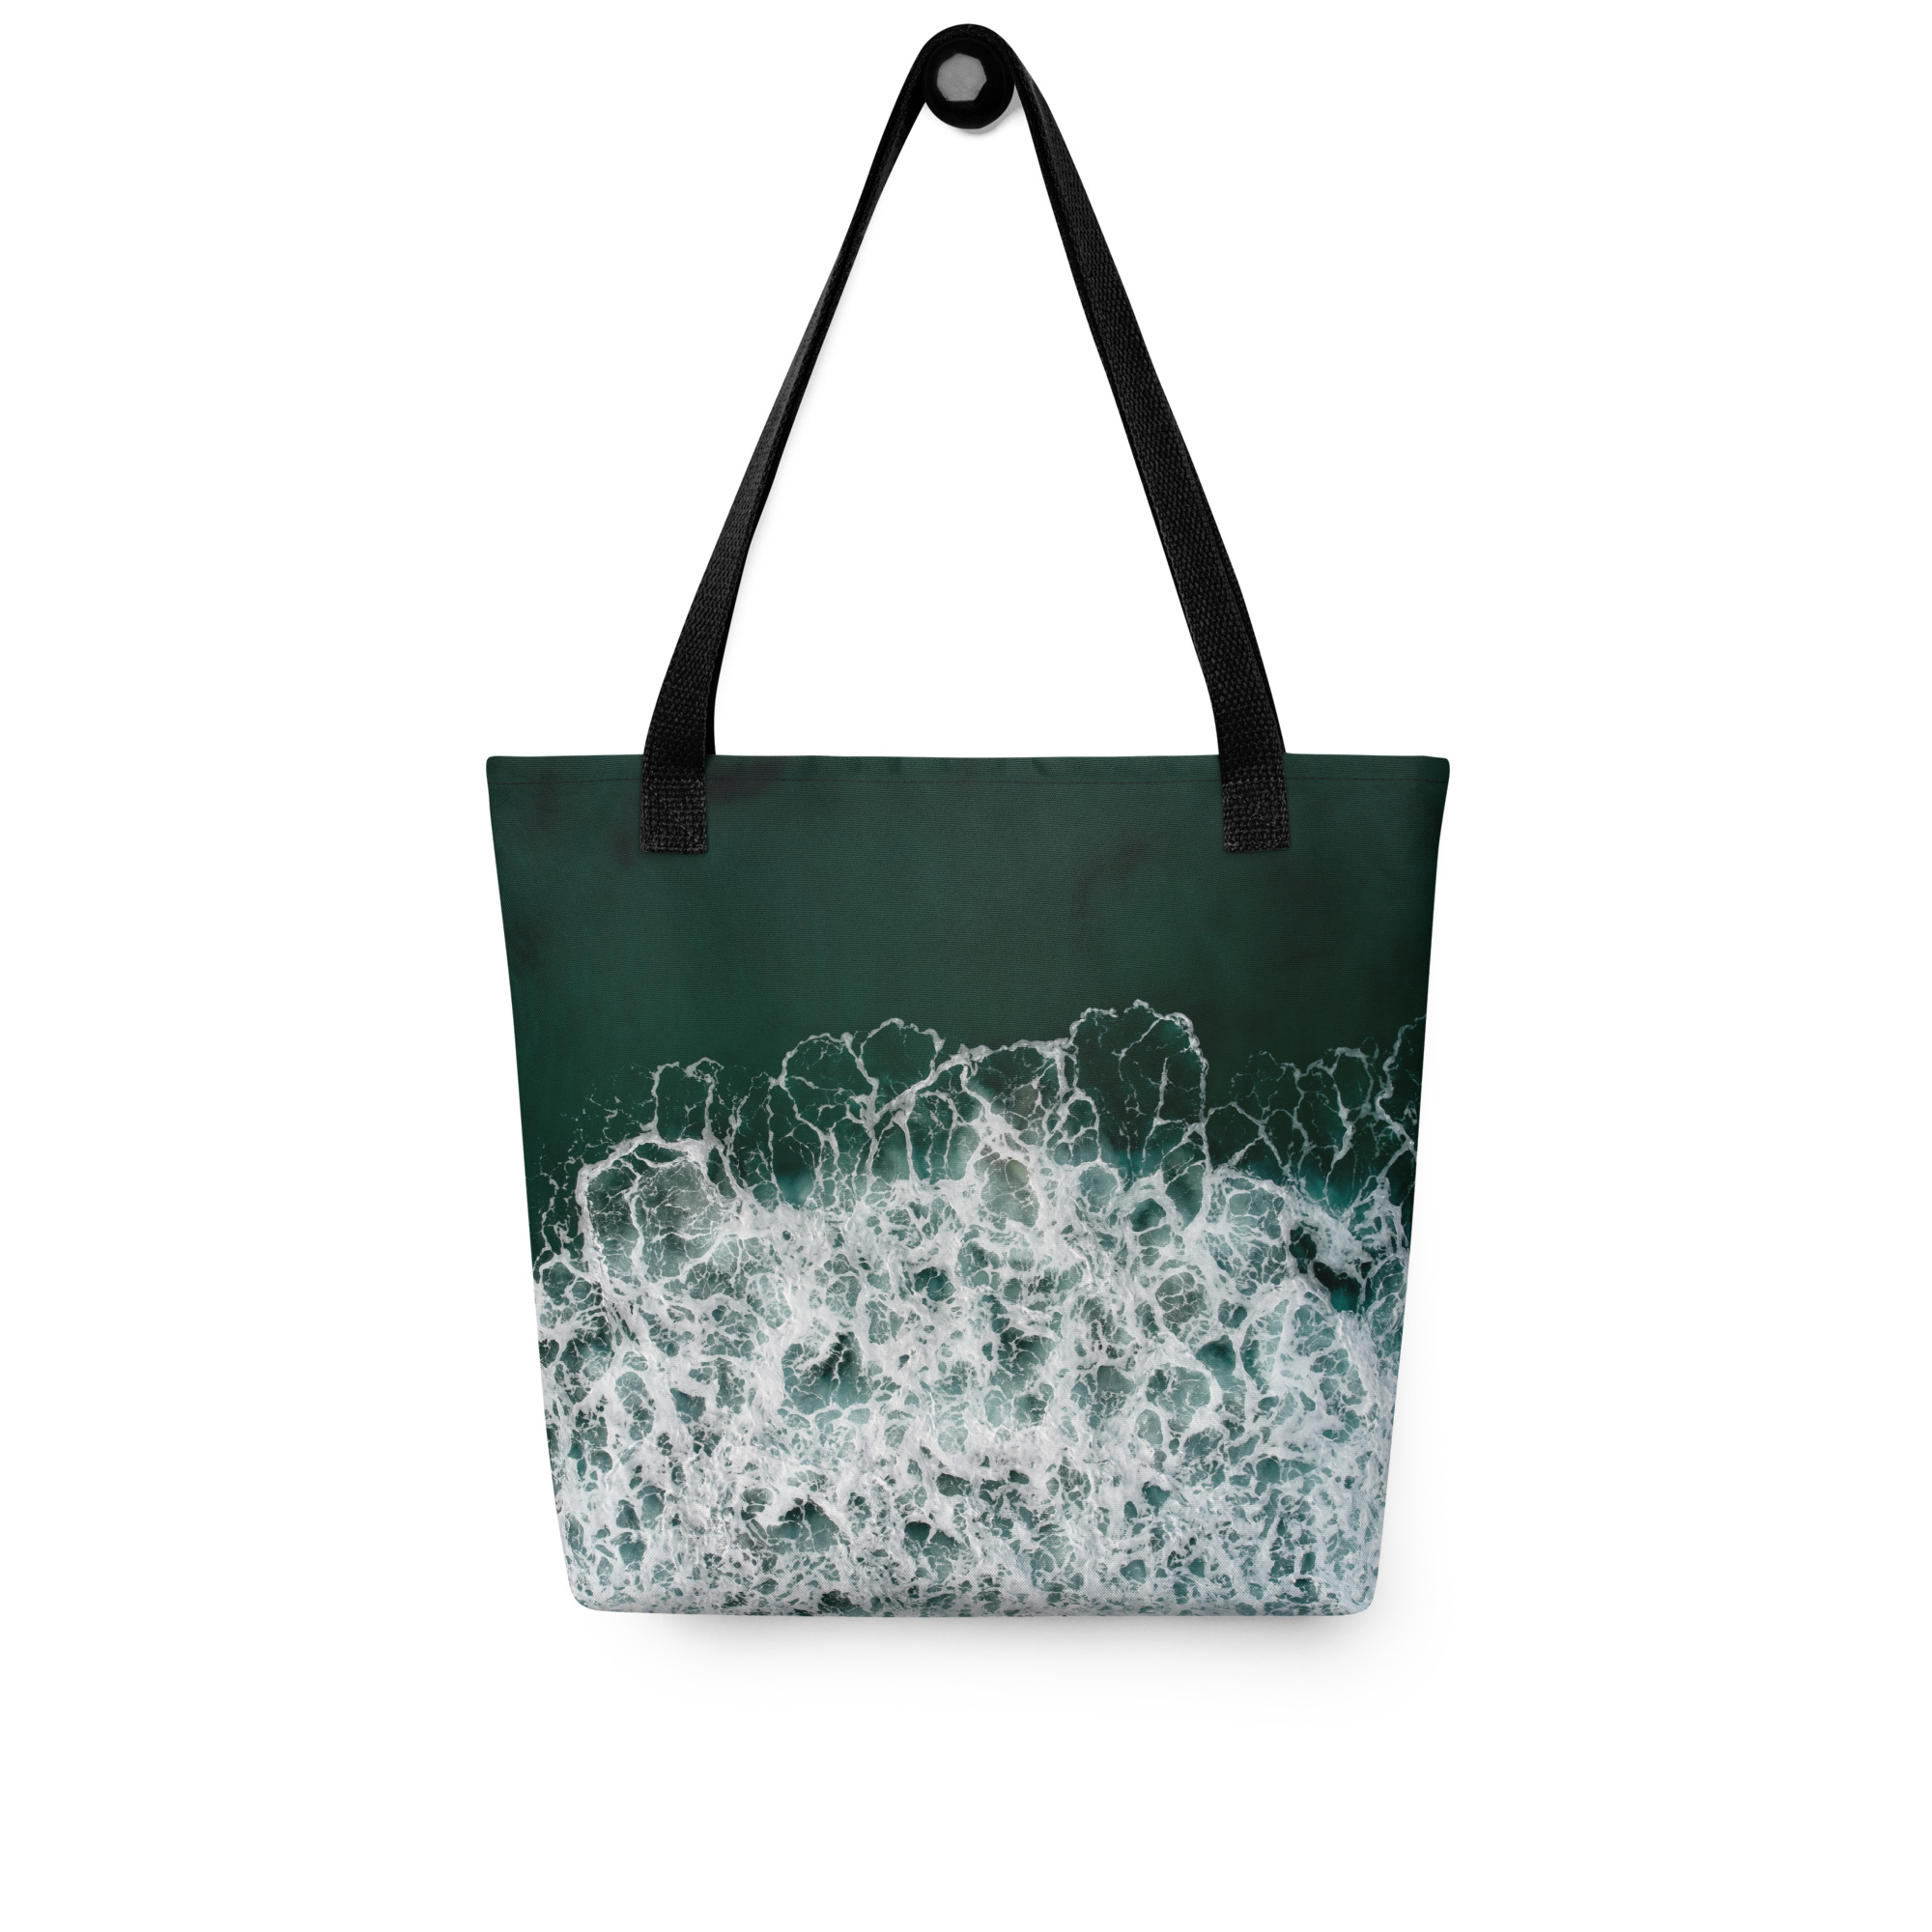 Reusable Recycle Shopping bag (13x13) - California Palms